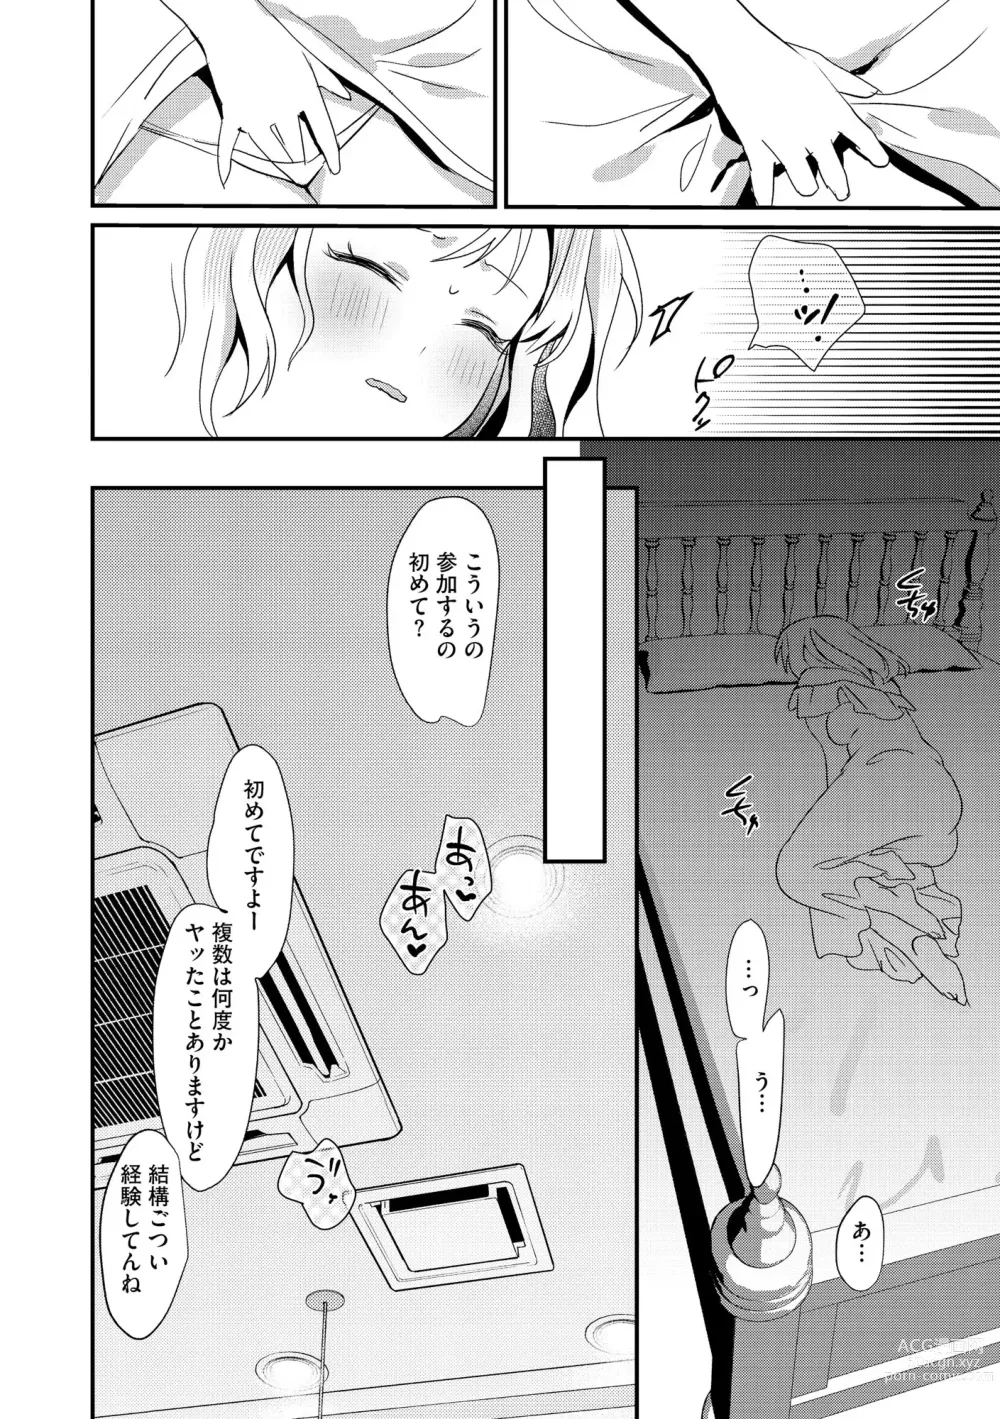 Page 10 of manga Cyberia Plus Vol. 14